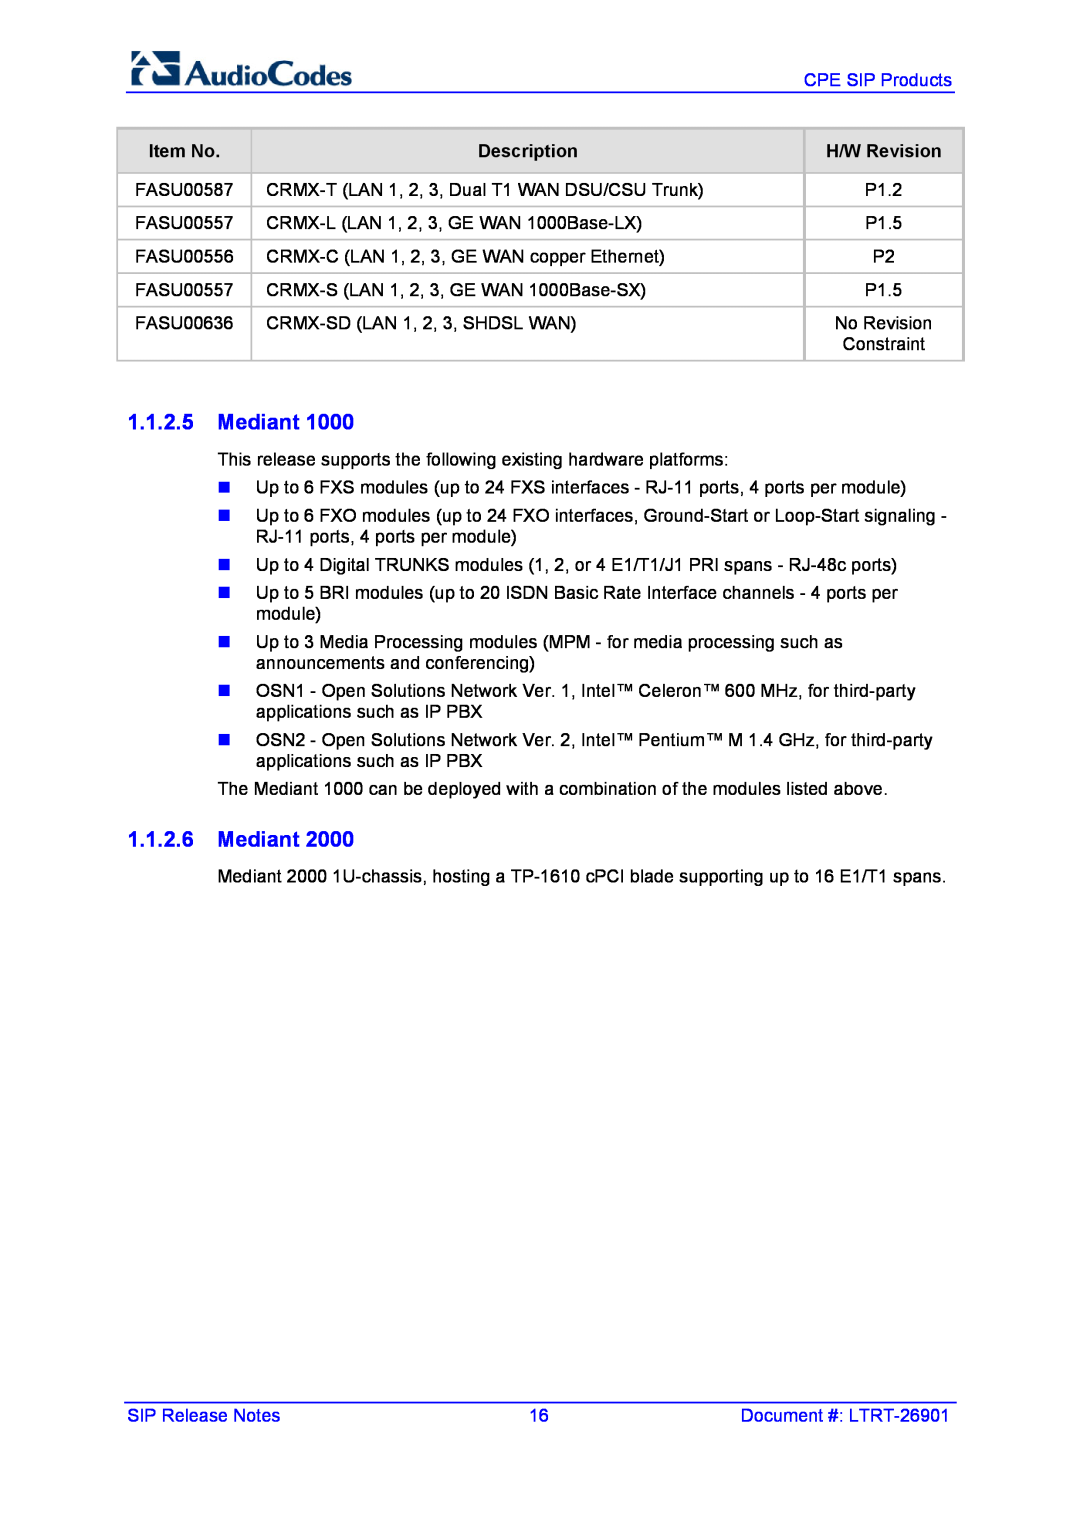 AudioControl VERSION 6.2 manual Mediant, Item No, Description, H/W Revision 